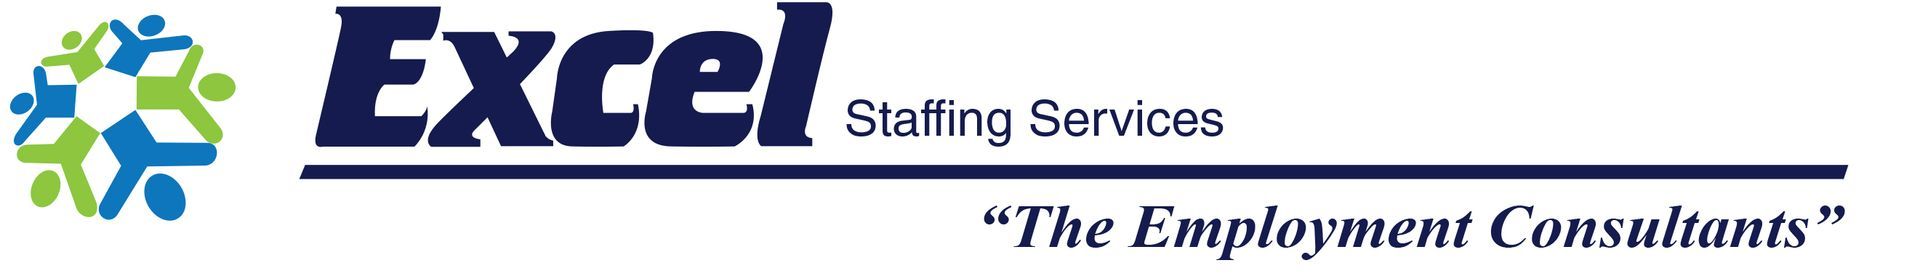 Excel Staffing Services Logo